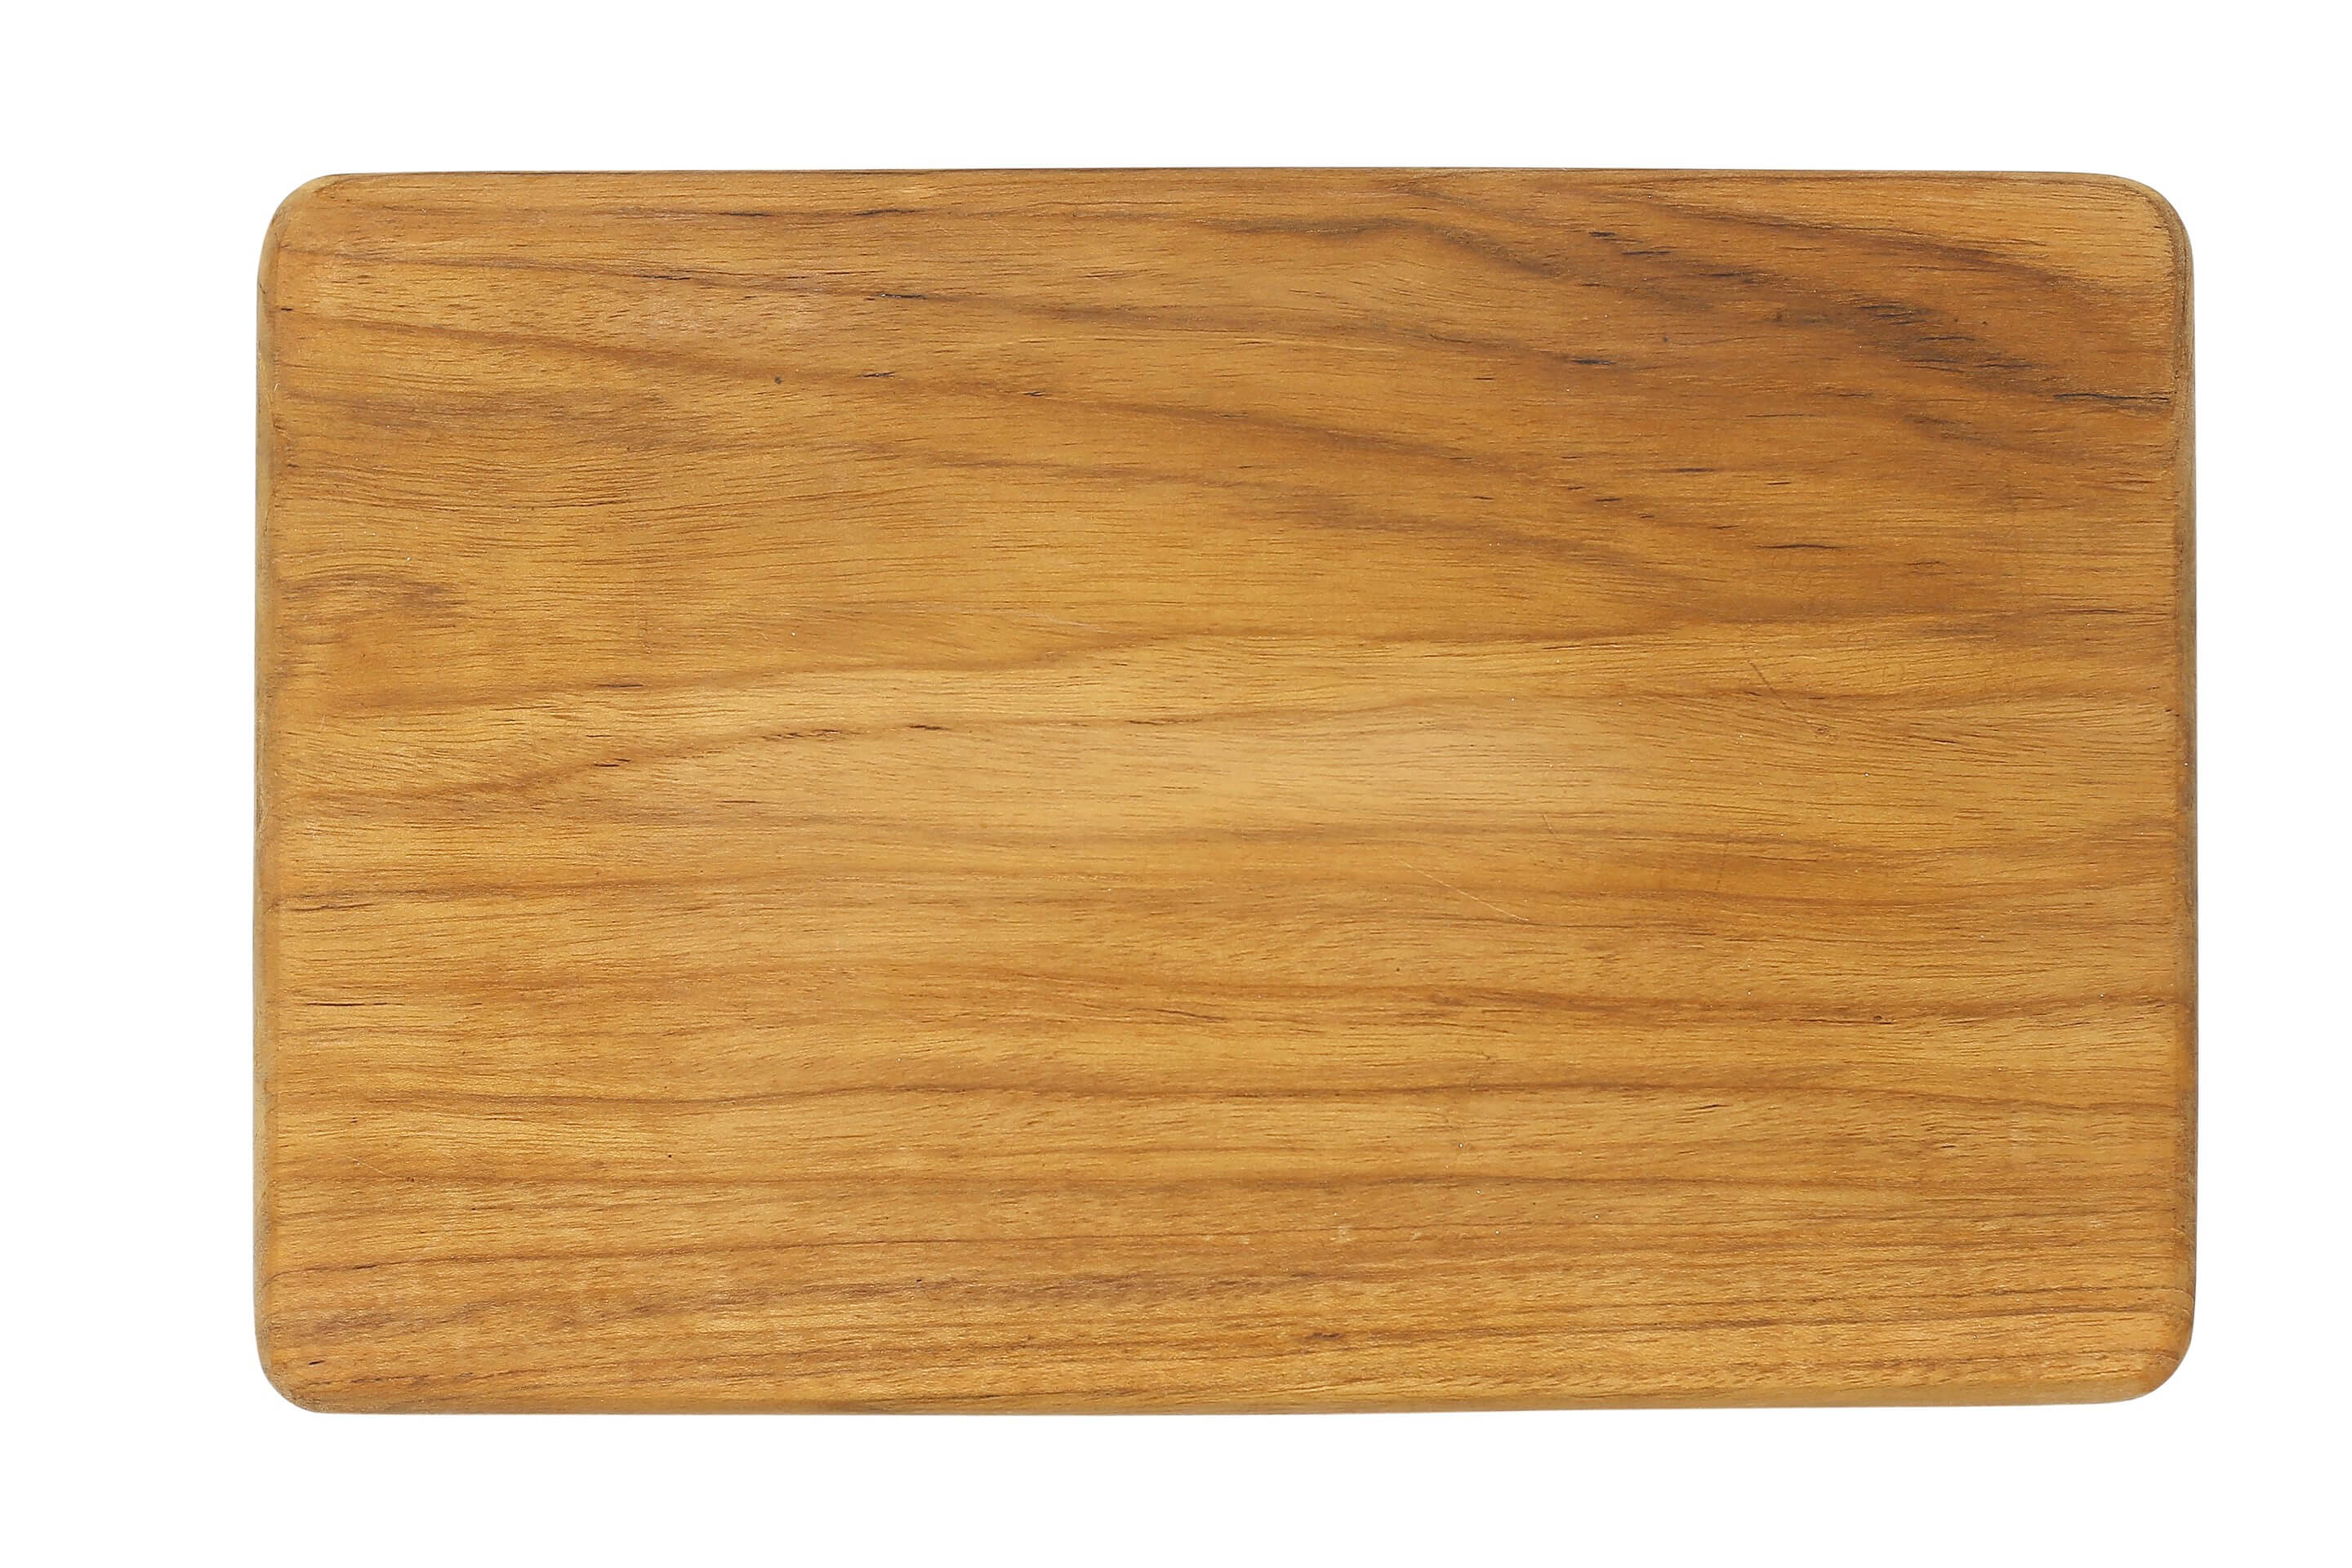 (Single wood) Rounded Edge Chopping Board Teak wood Cutting Board